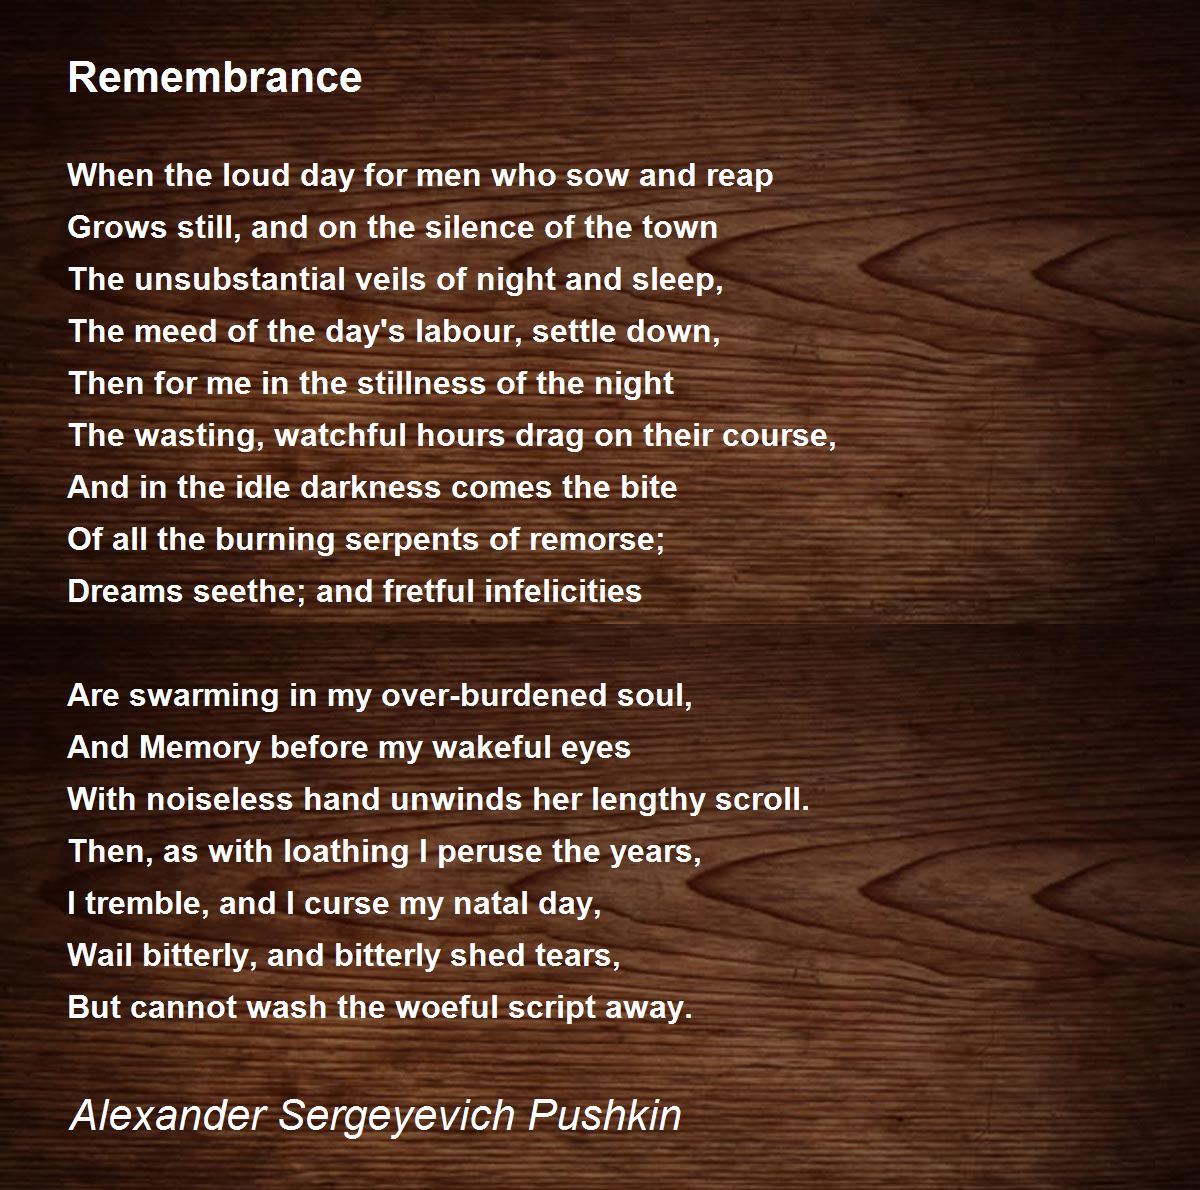 Remembrance Poem by Alexander Sergeyevich Pushkin - Poem 